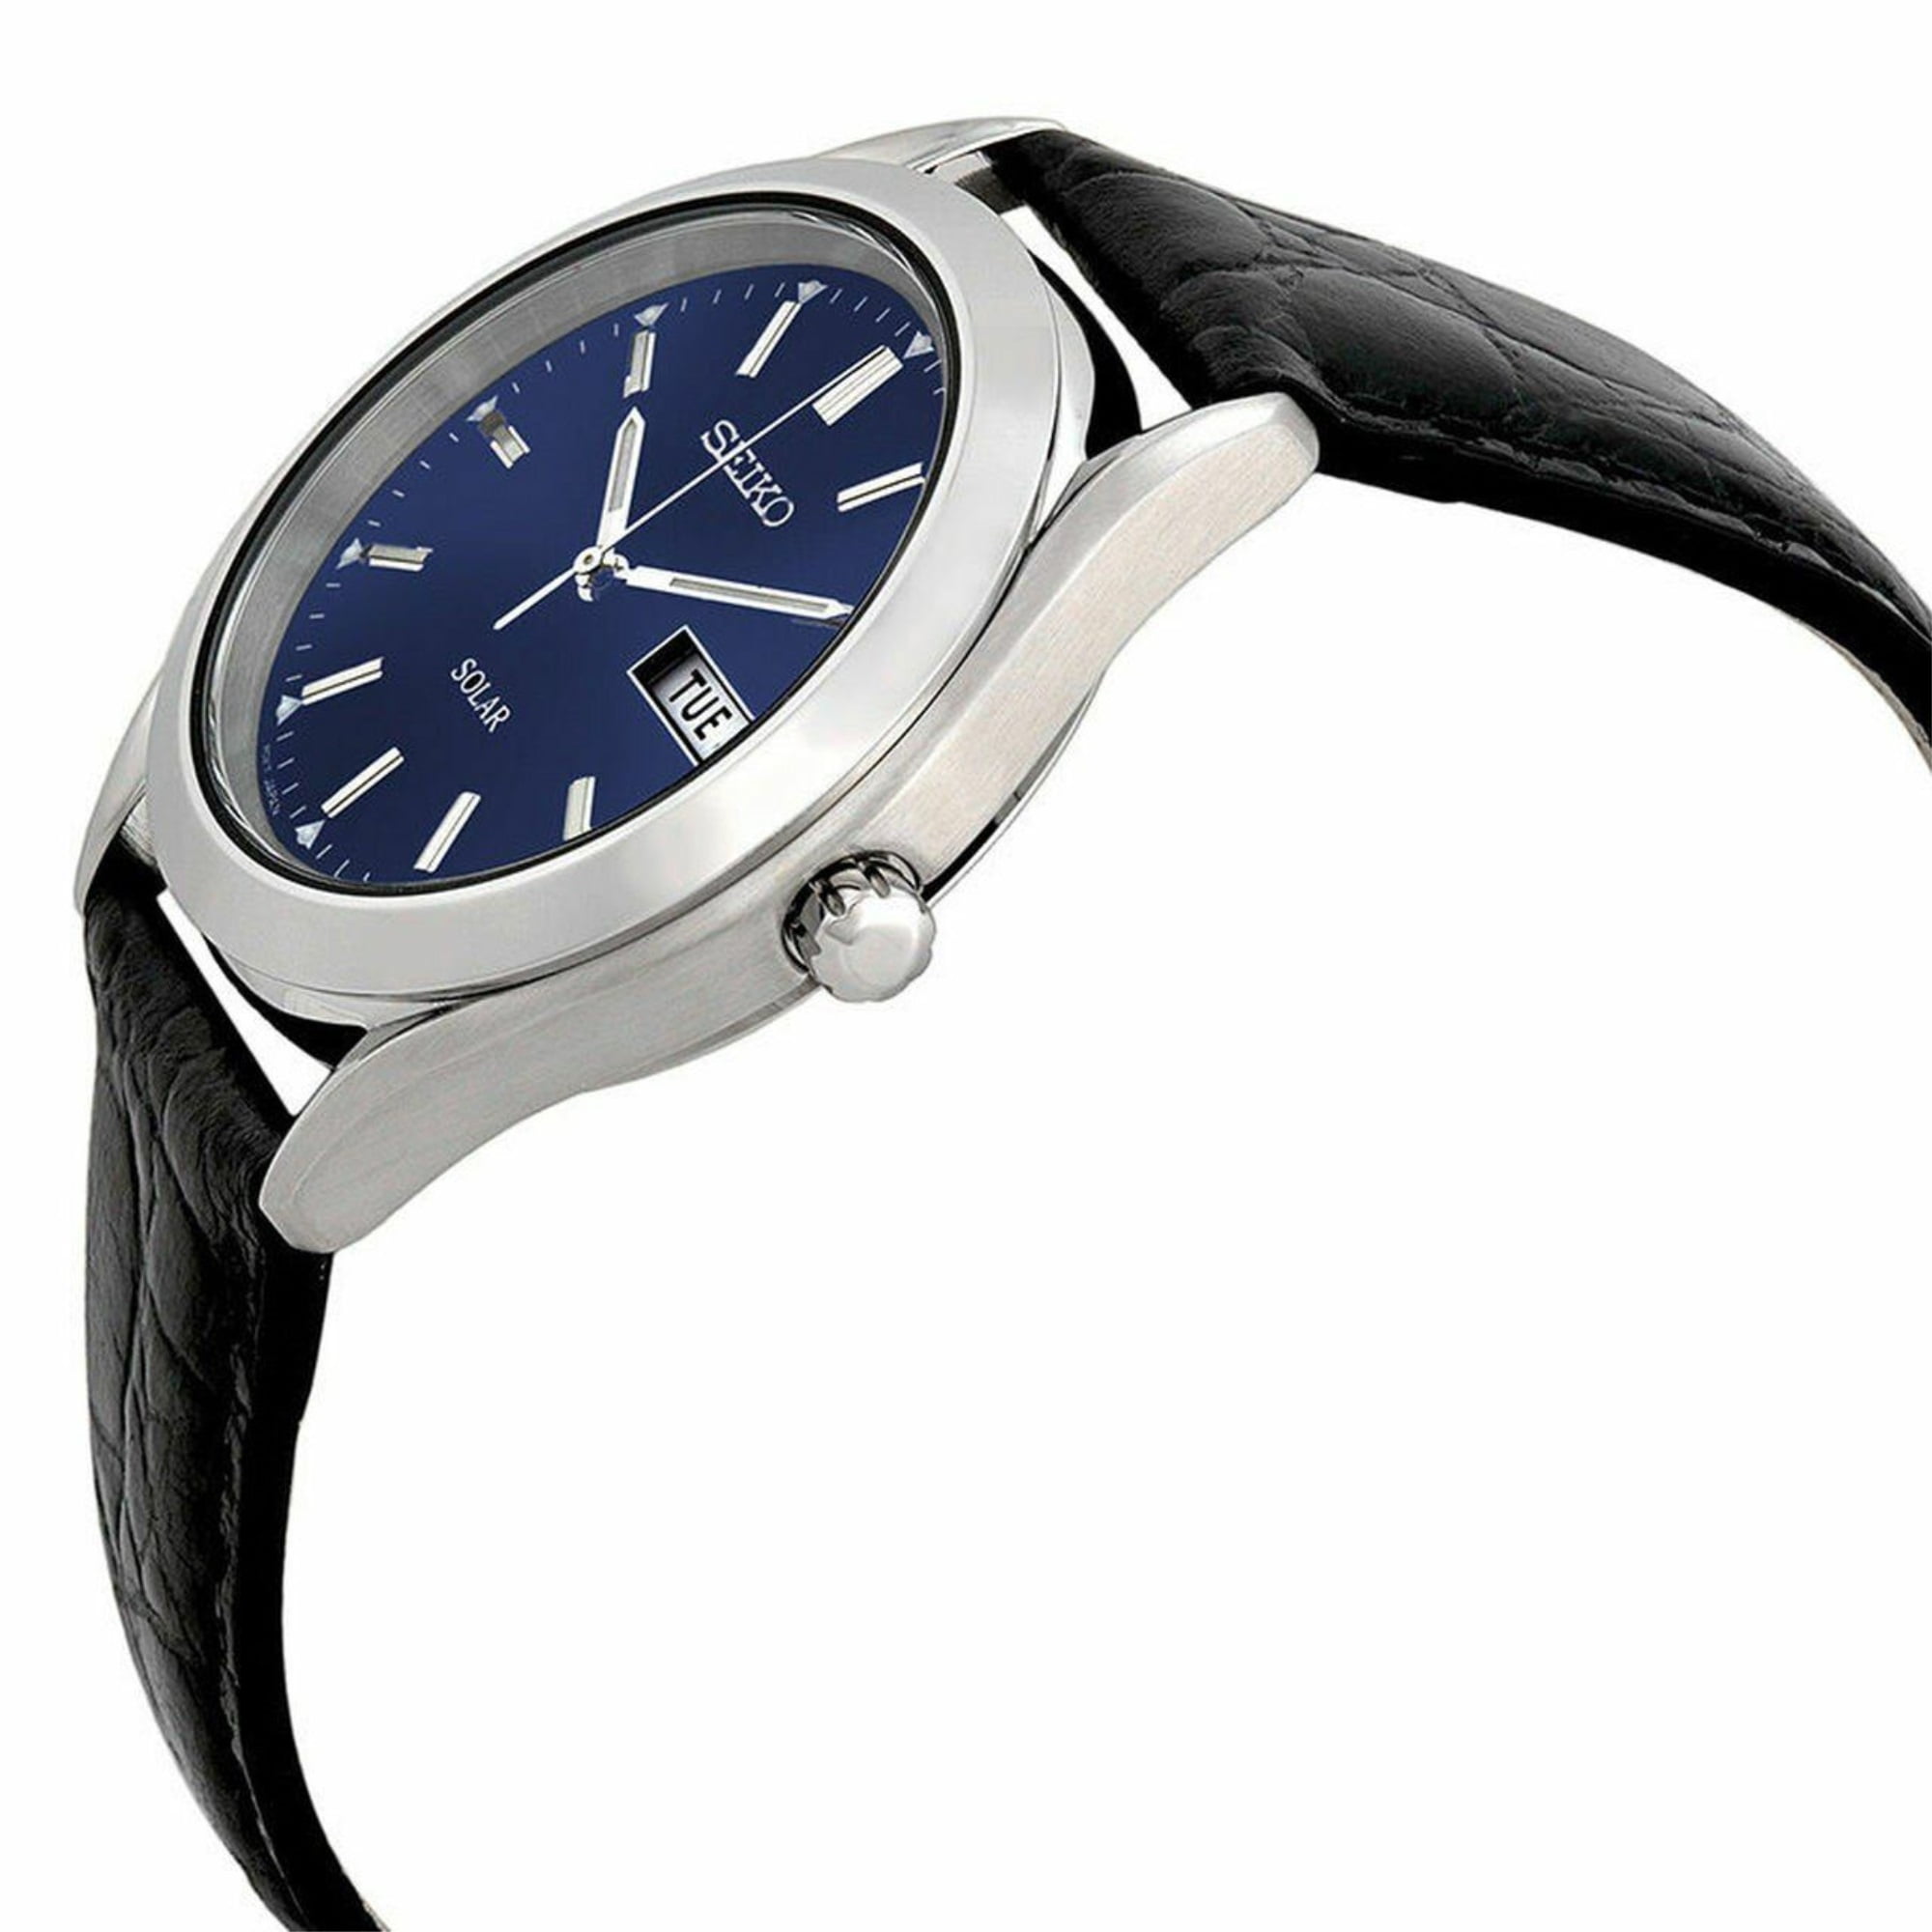 Seiko Men's Solar Stainless Watch - Black Leather Strap - Blue Dial -  SNE049 